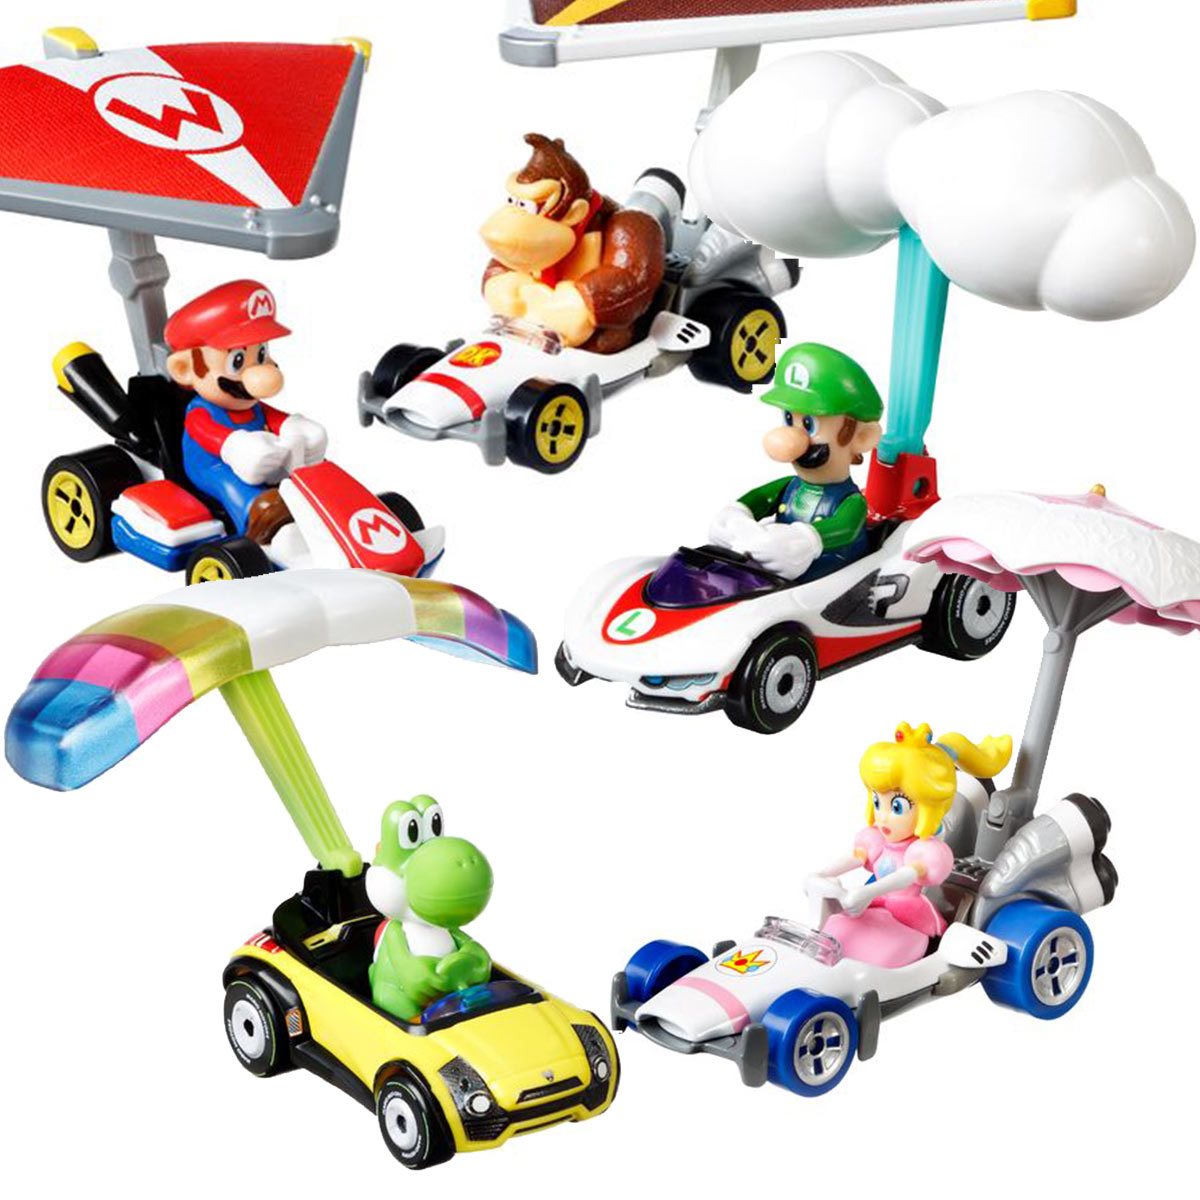 Hot Wheels Mario Kart Diecast Glider Vehicle Pack, 8 Action Figure Set 